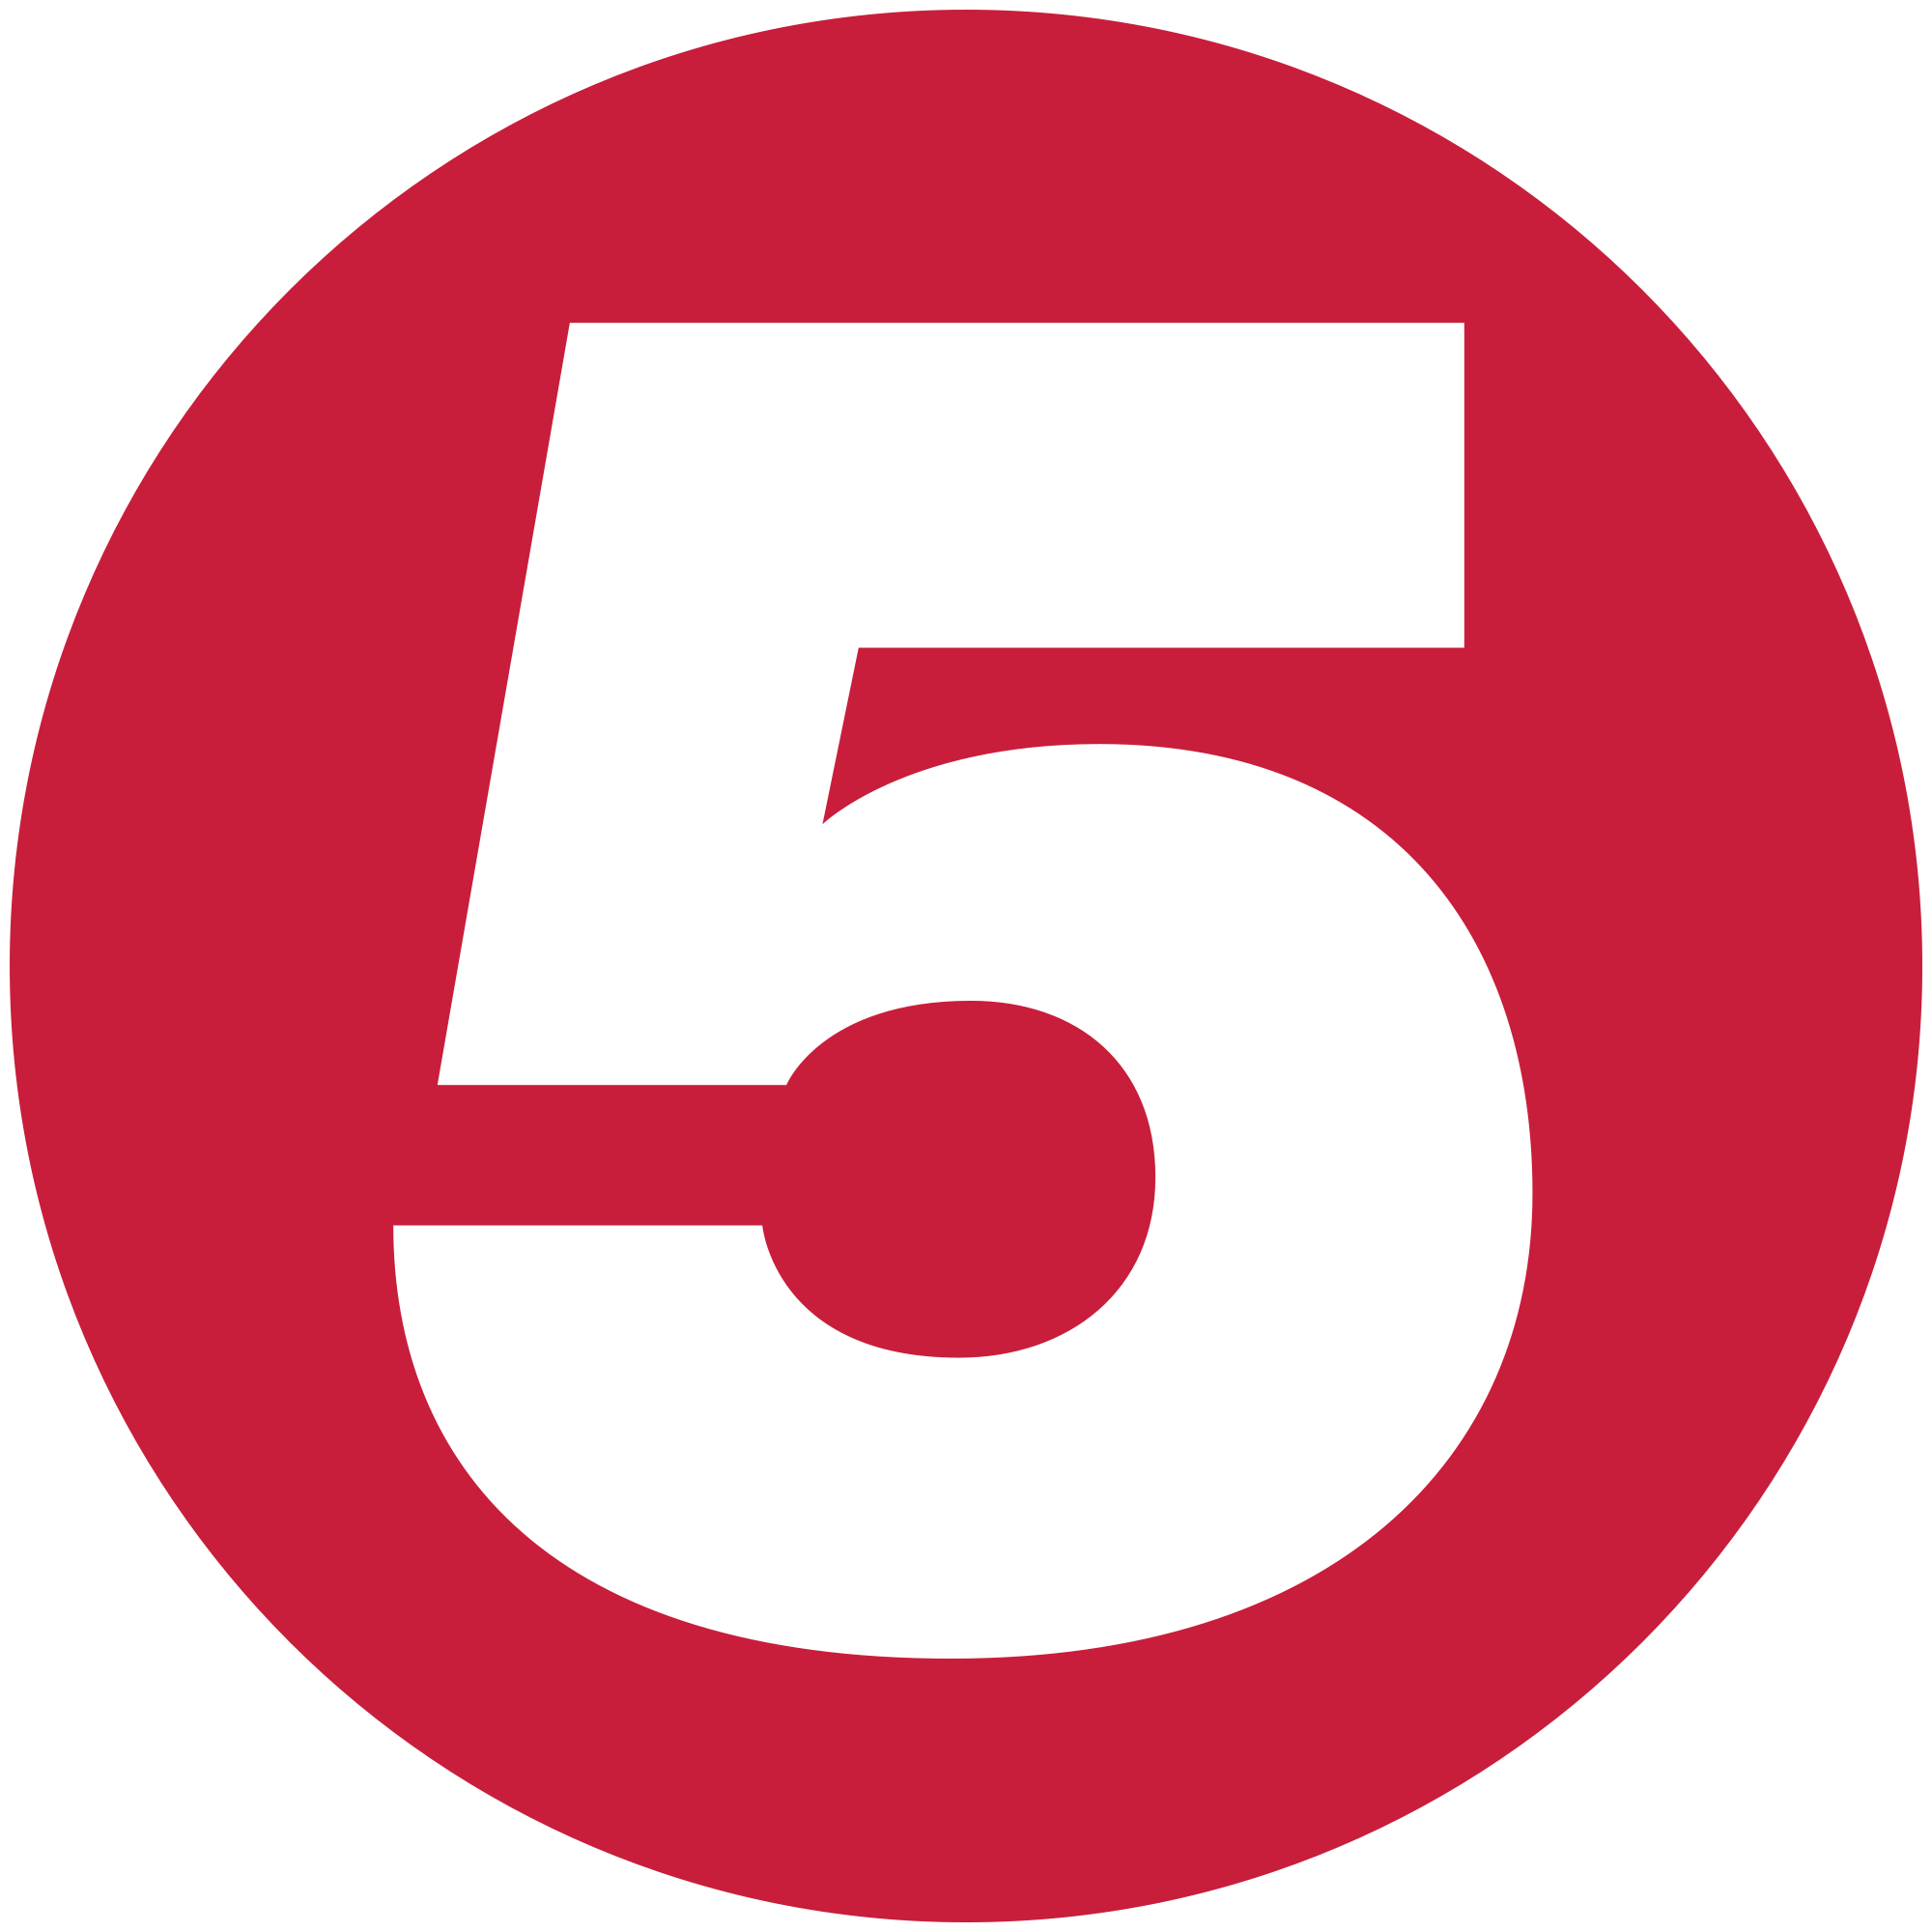 Channel 5 Logo - Channel 5 logo 2011.svg